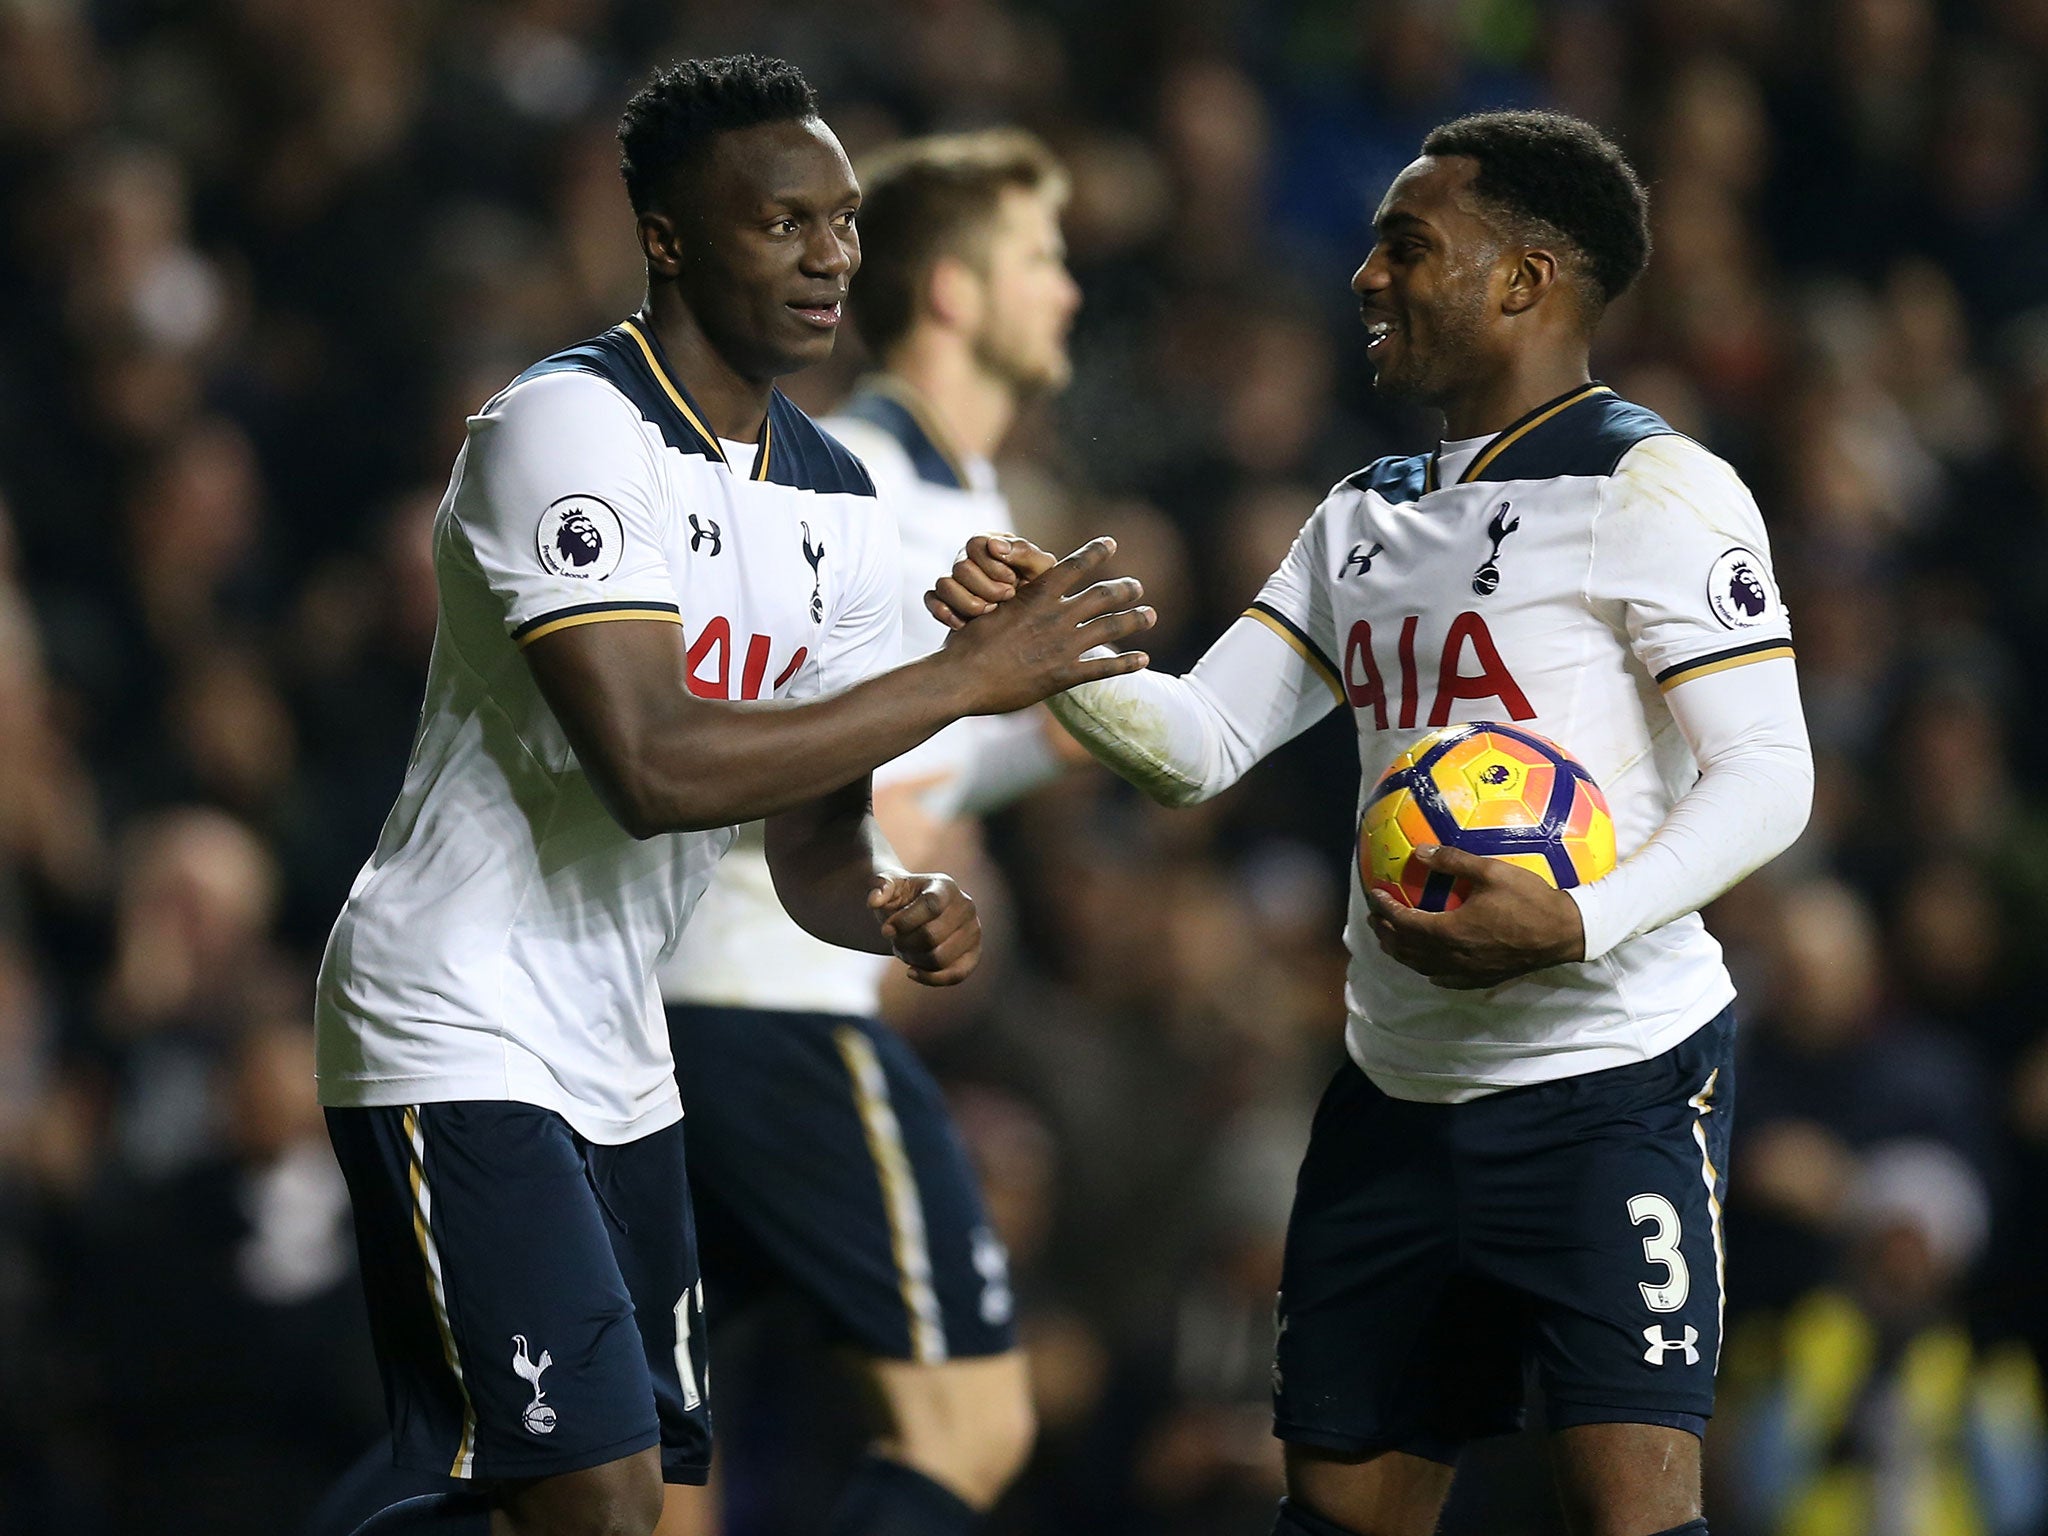 Danny Rose (right) congratulates Victor Wanyama after scoring Tottenham's third goal